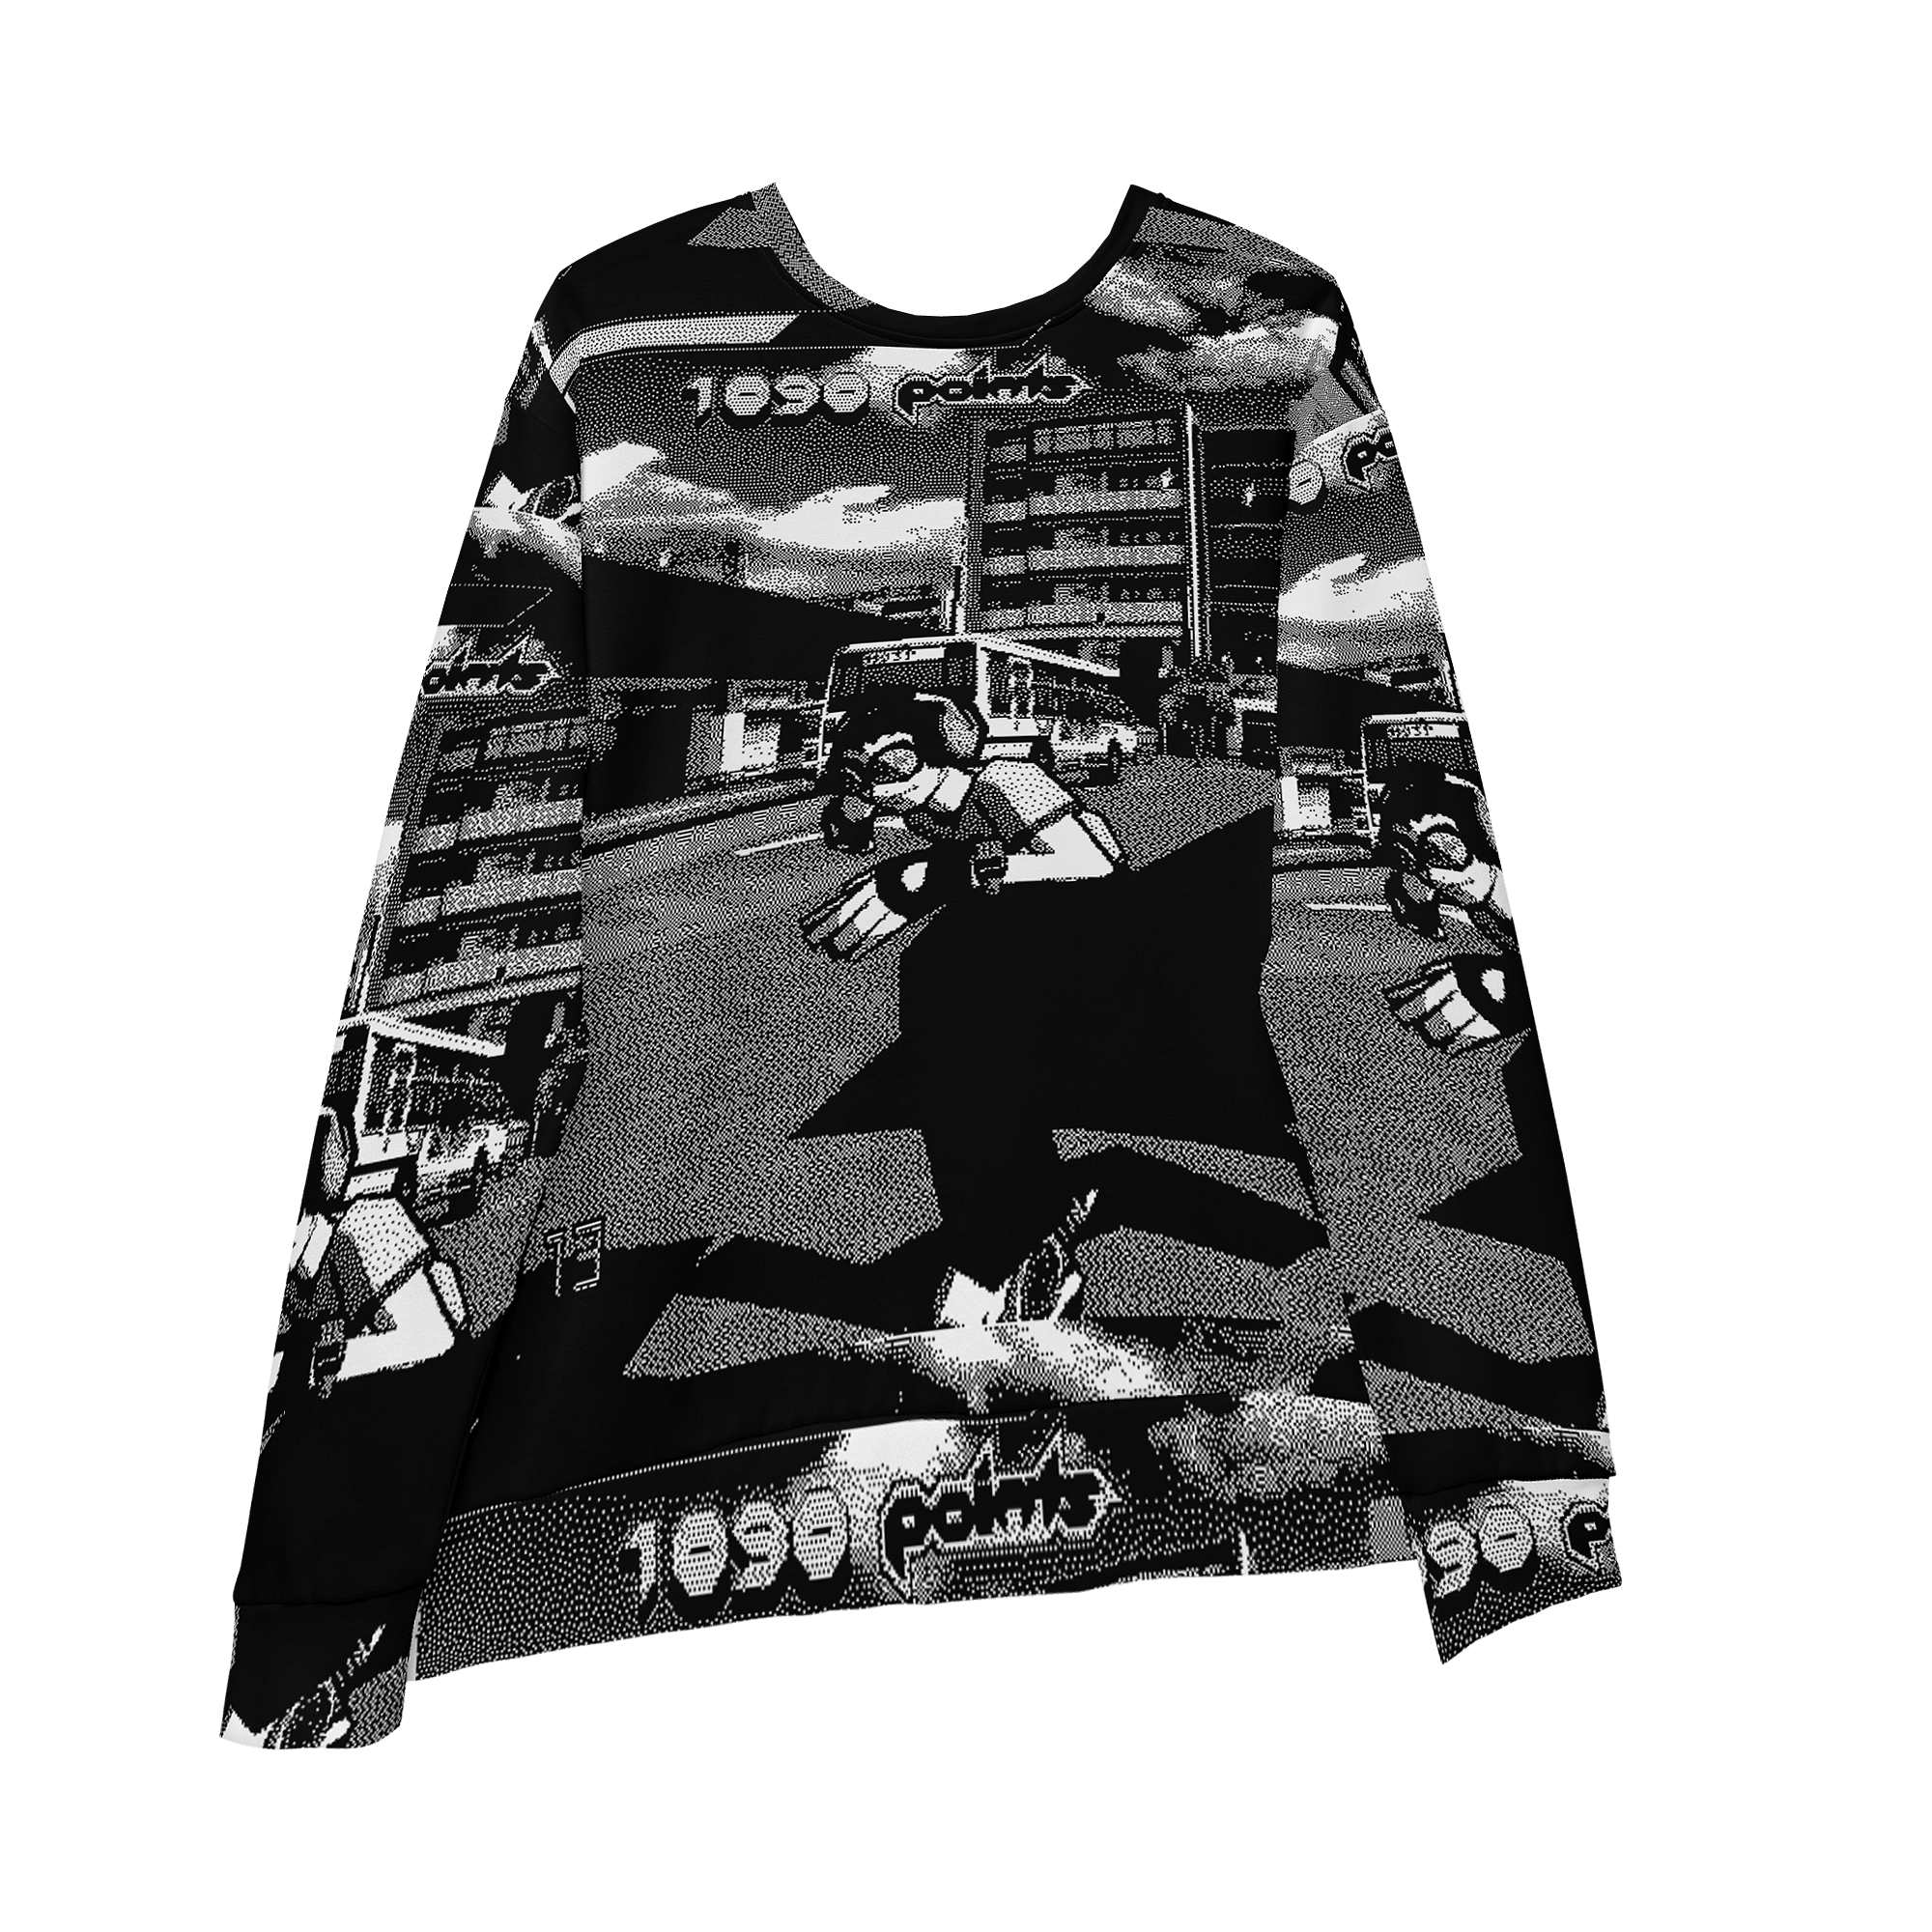 JET JET® Unisex Sweatshirt (7 pieces for sale) - Kikillo Club